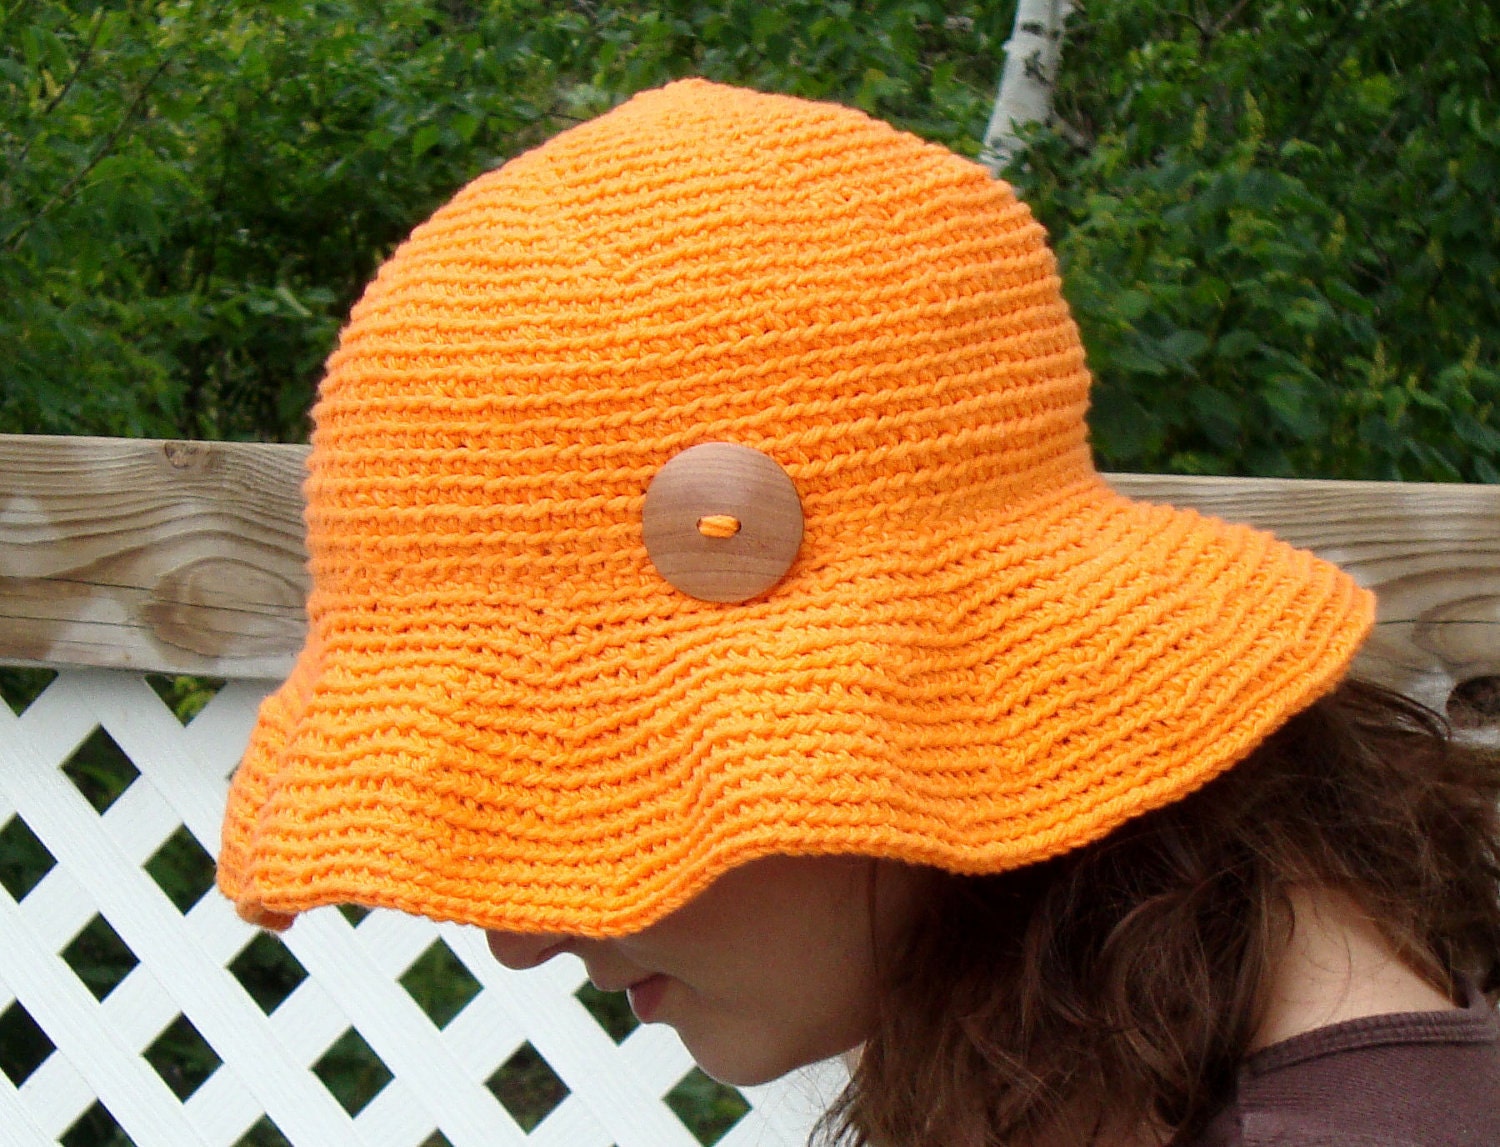 Hand-Crocheted Beach/Summer/Garden Hat - Color Hot Orange